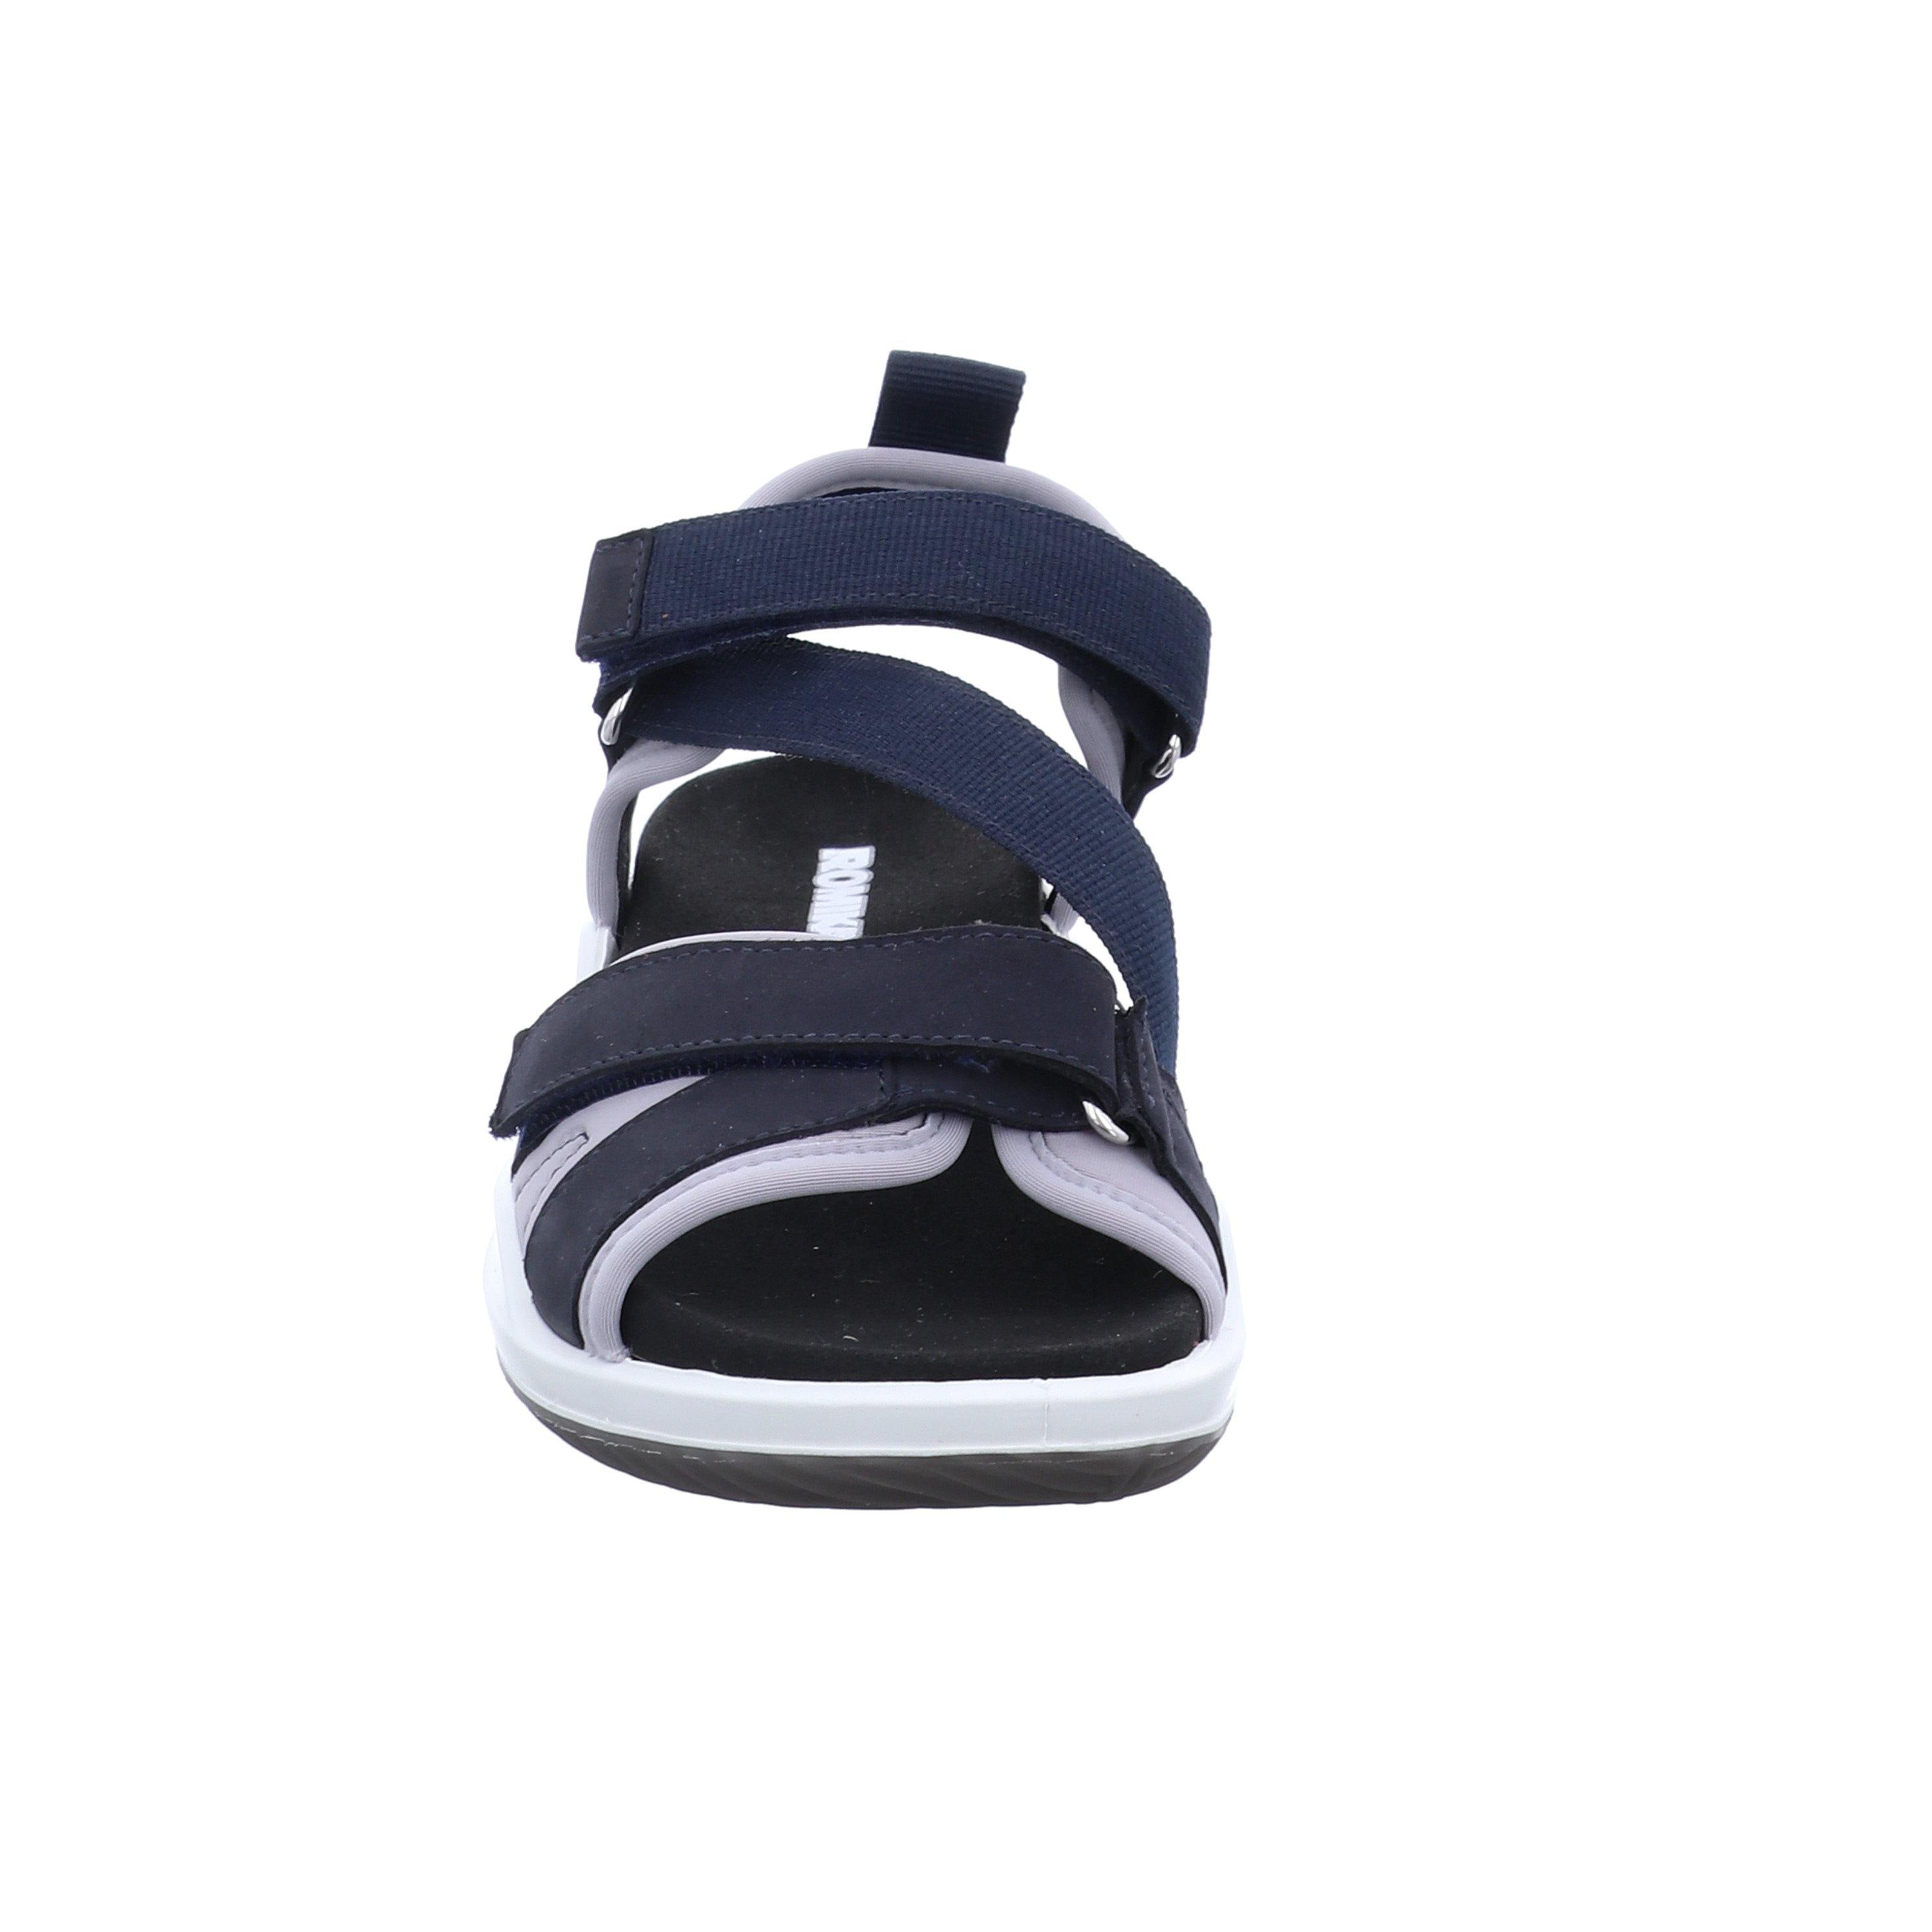 Sandal style SUMATRA 06 by Romika USA